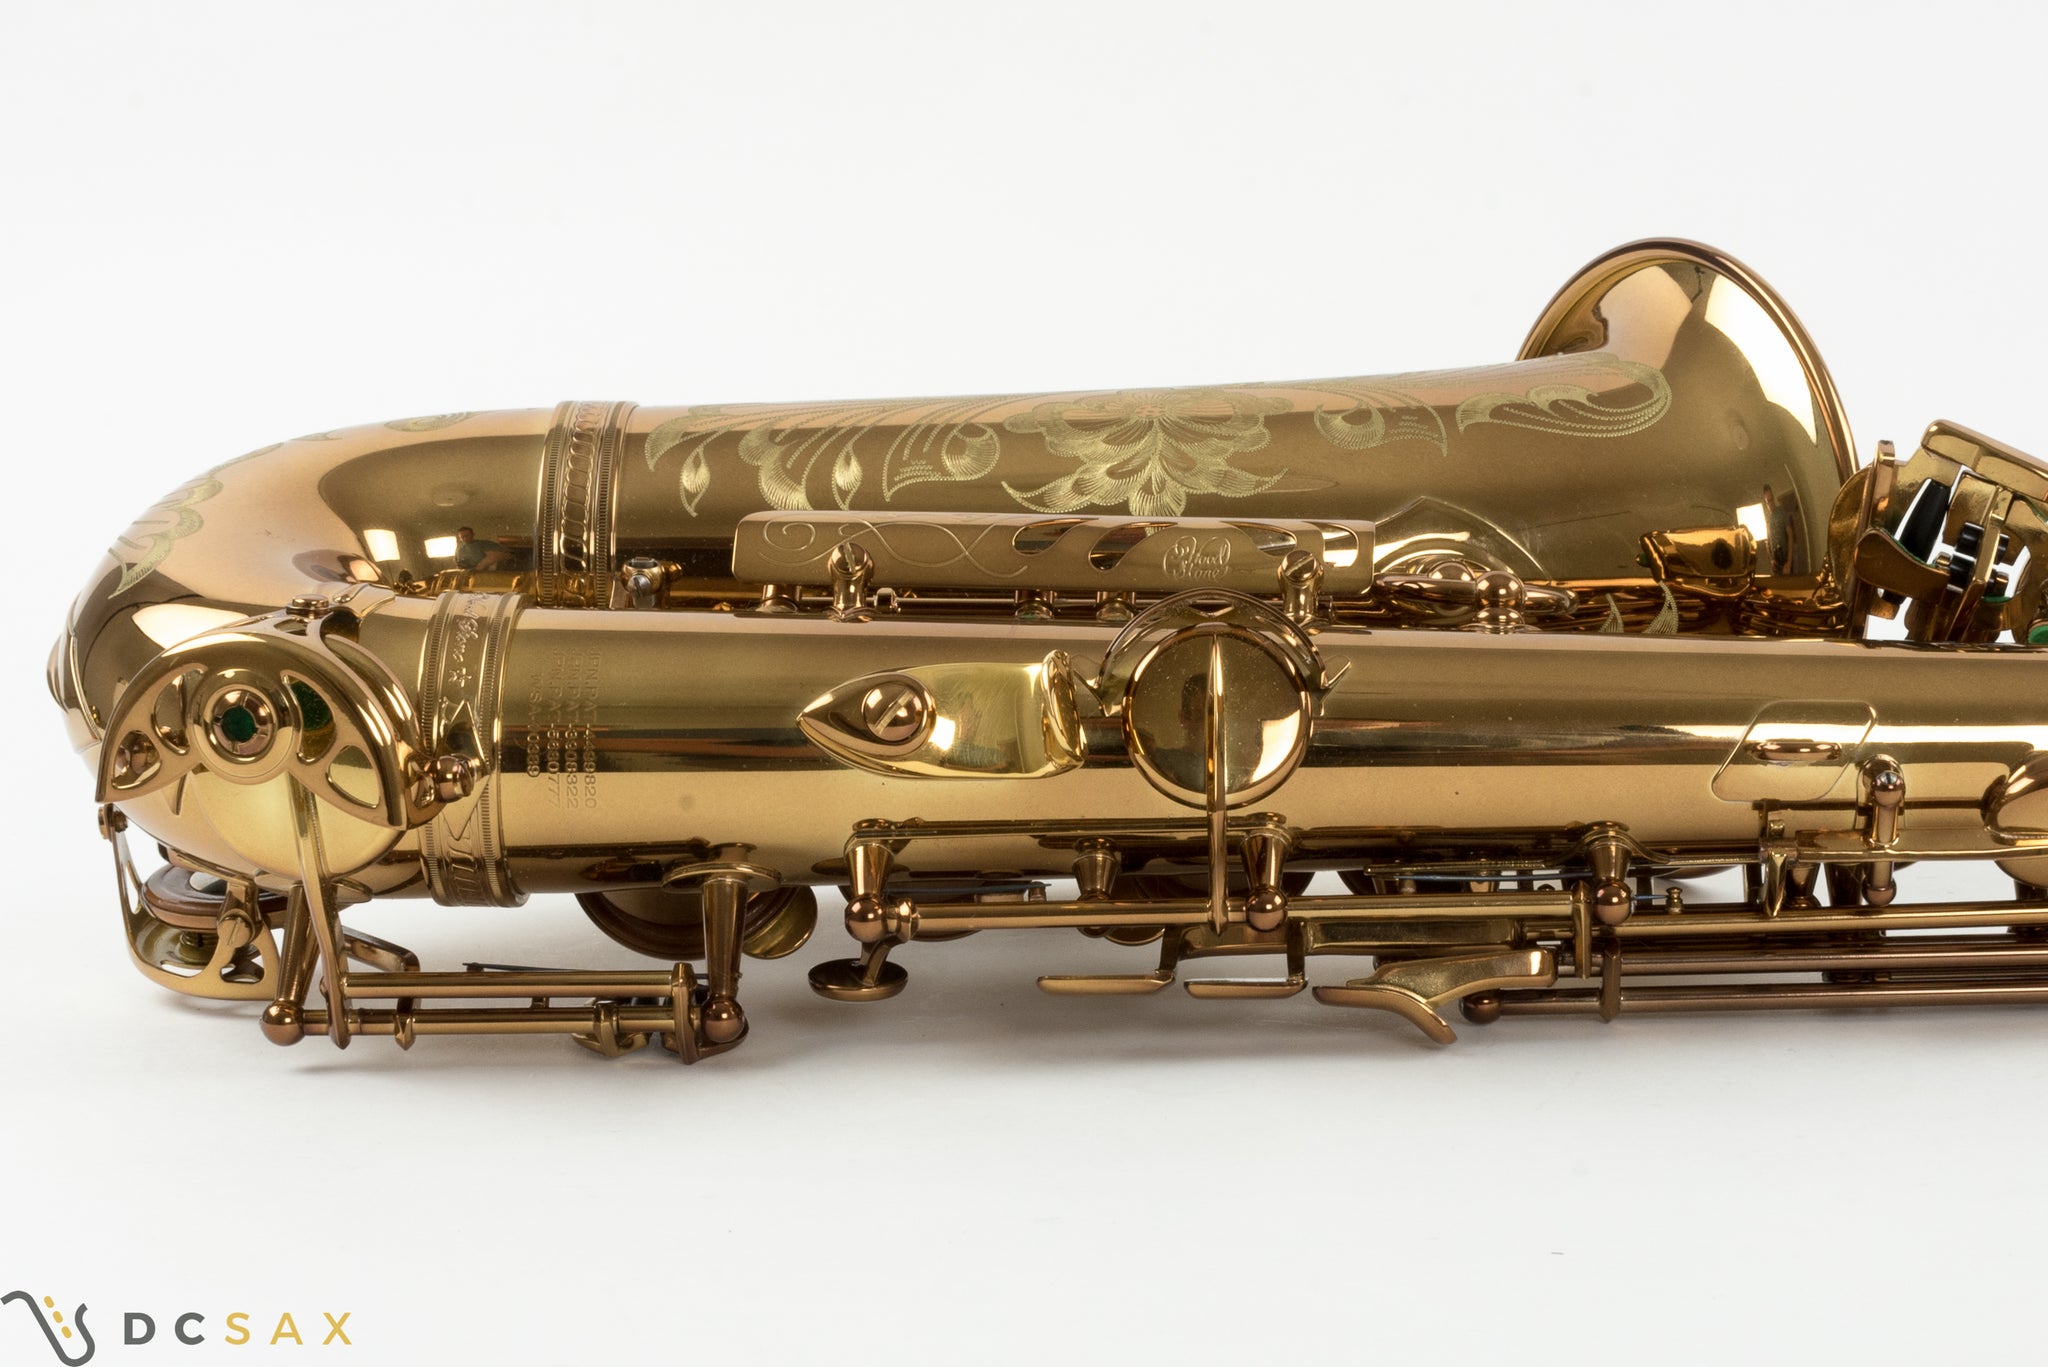 Ishimori Woodstone Alto Saxophone, Mint Condition, Video